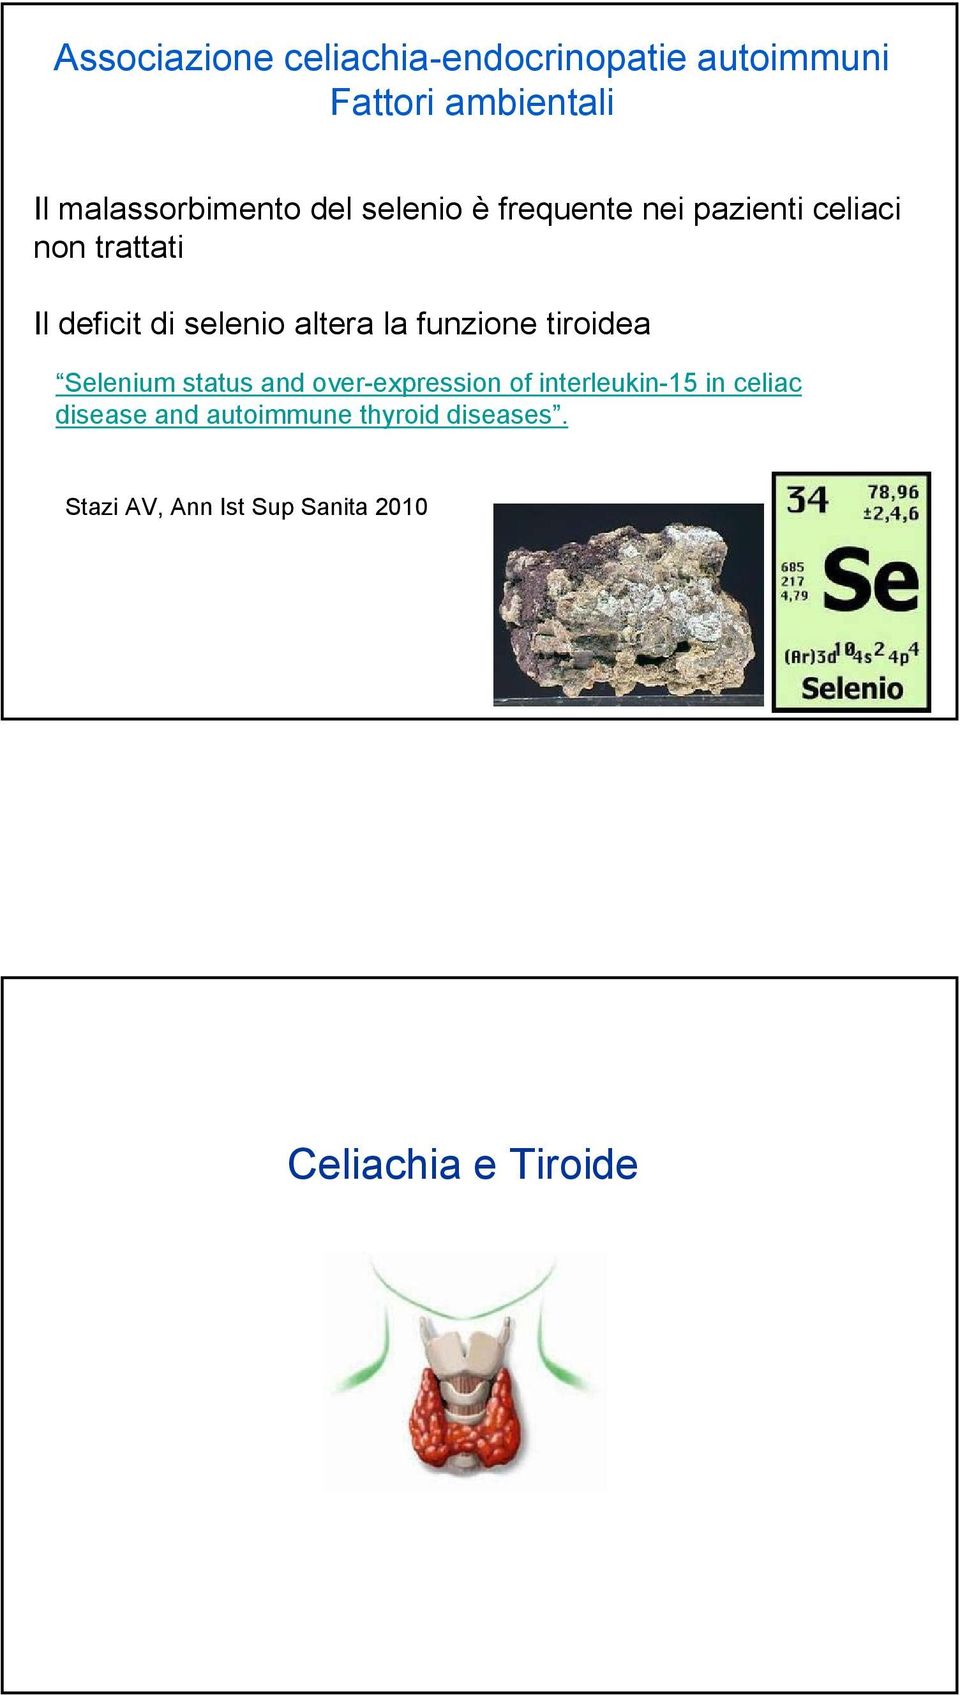 la funzione tiroidea Selenium status and over-expression of interleukin-15 in celiac